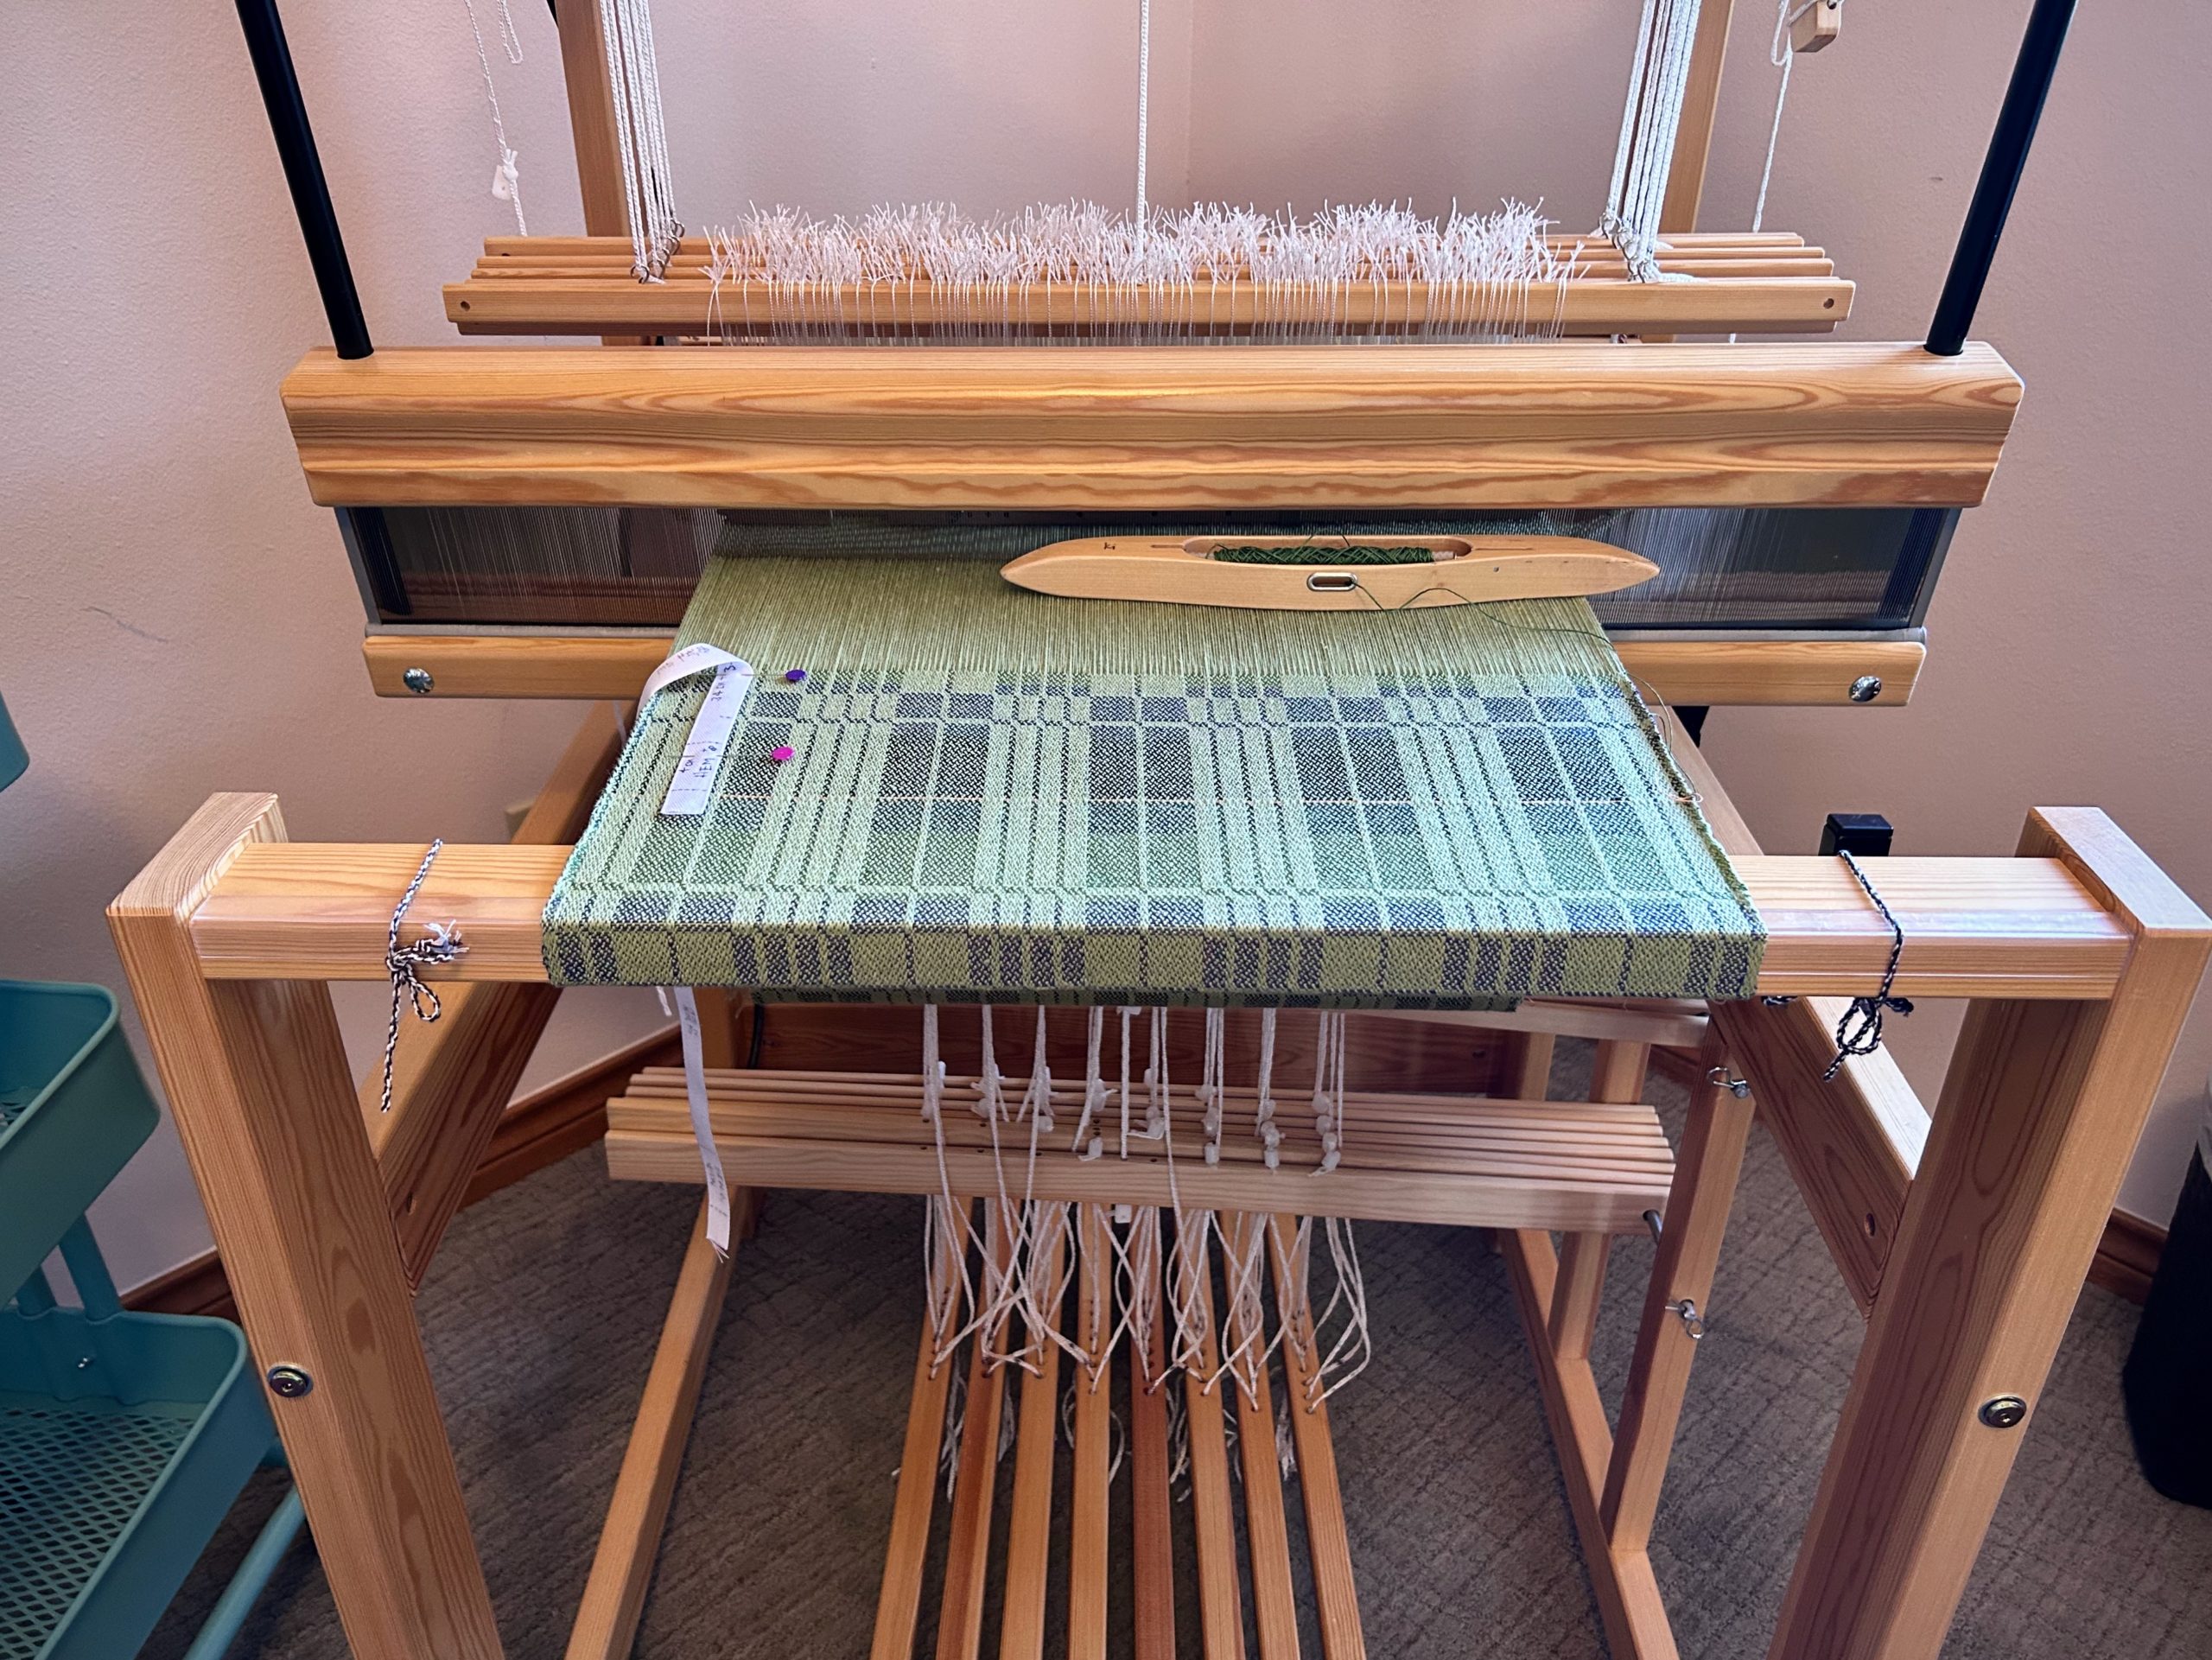 Weaving Sticks - Simple & Portable Weaving Tools - Warped Fibers